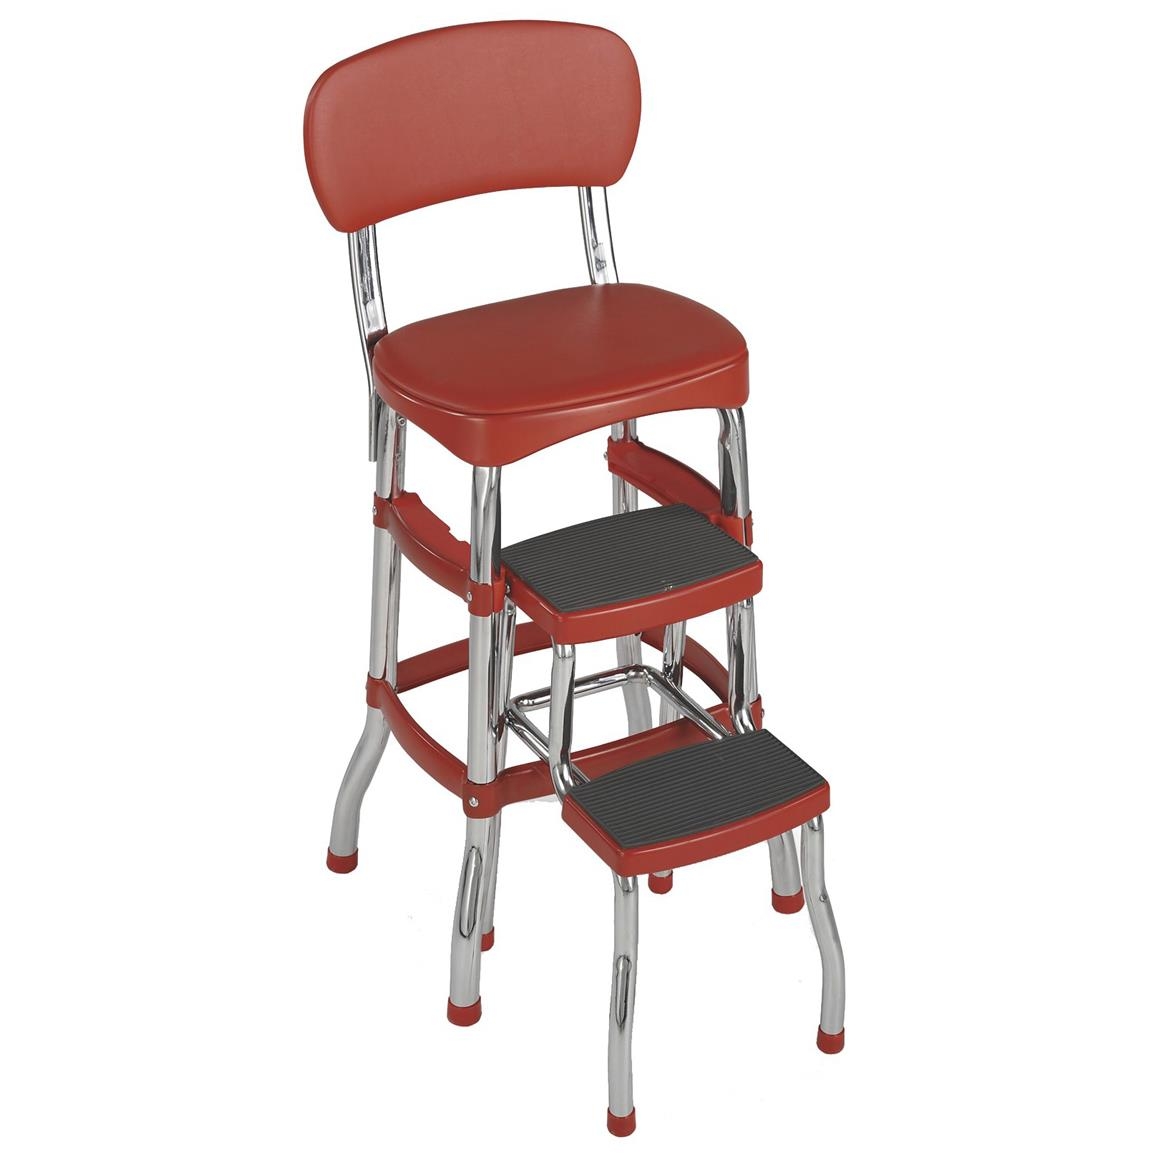 Retro Chair/counter Stylish Chrome Finish Stool - Red